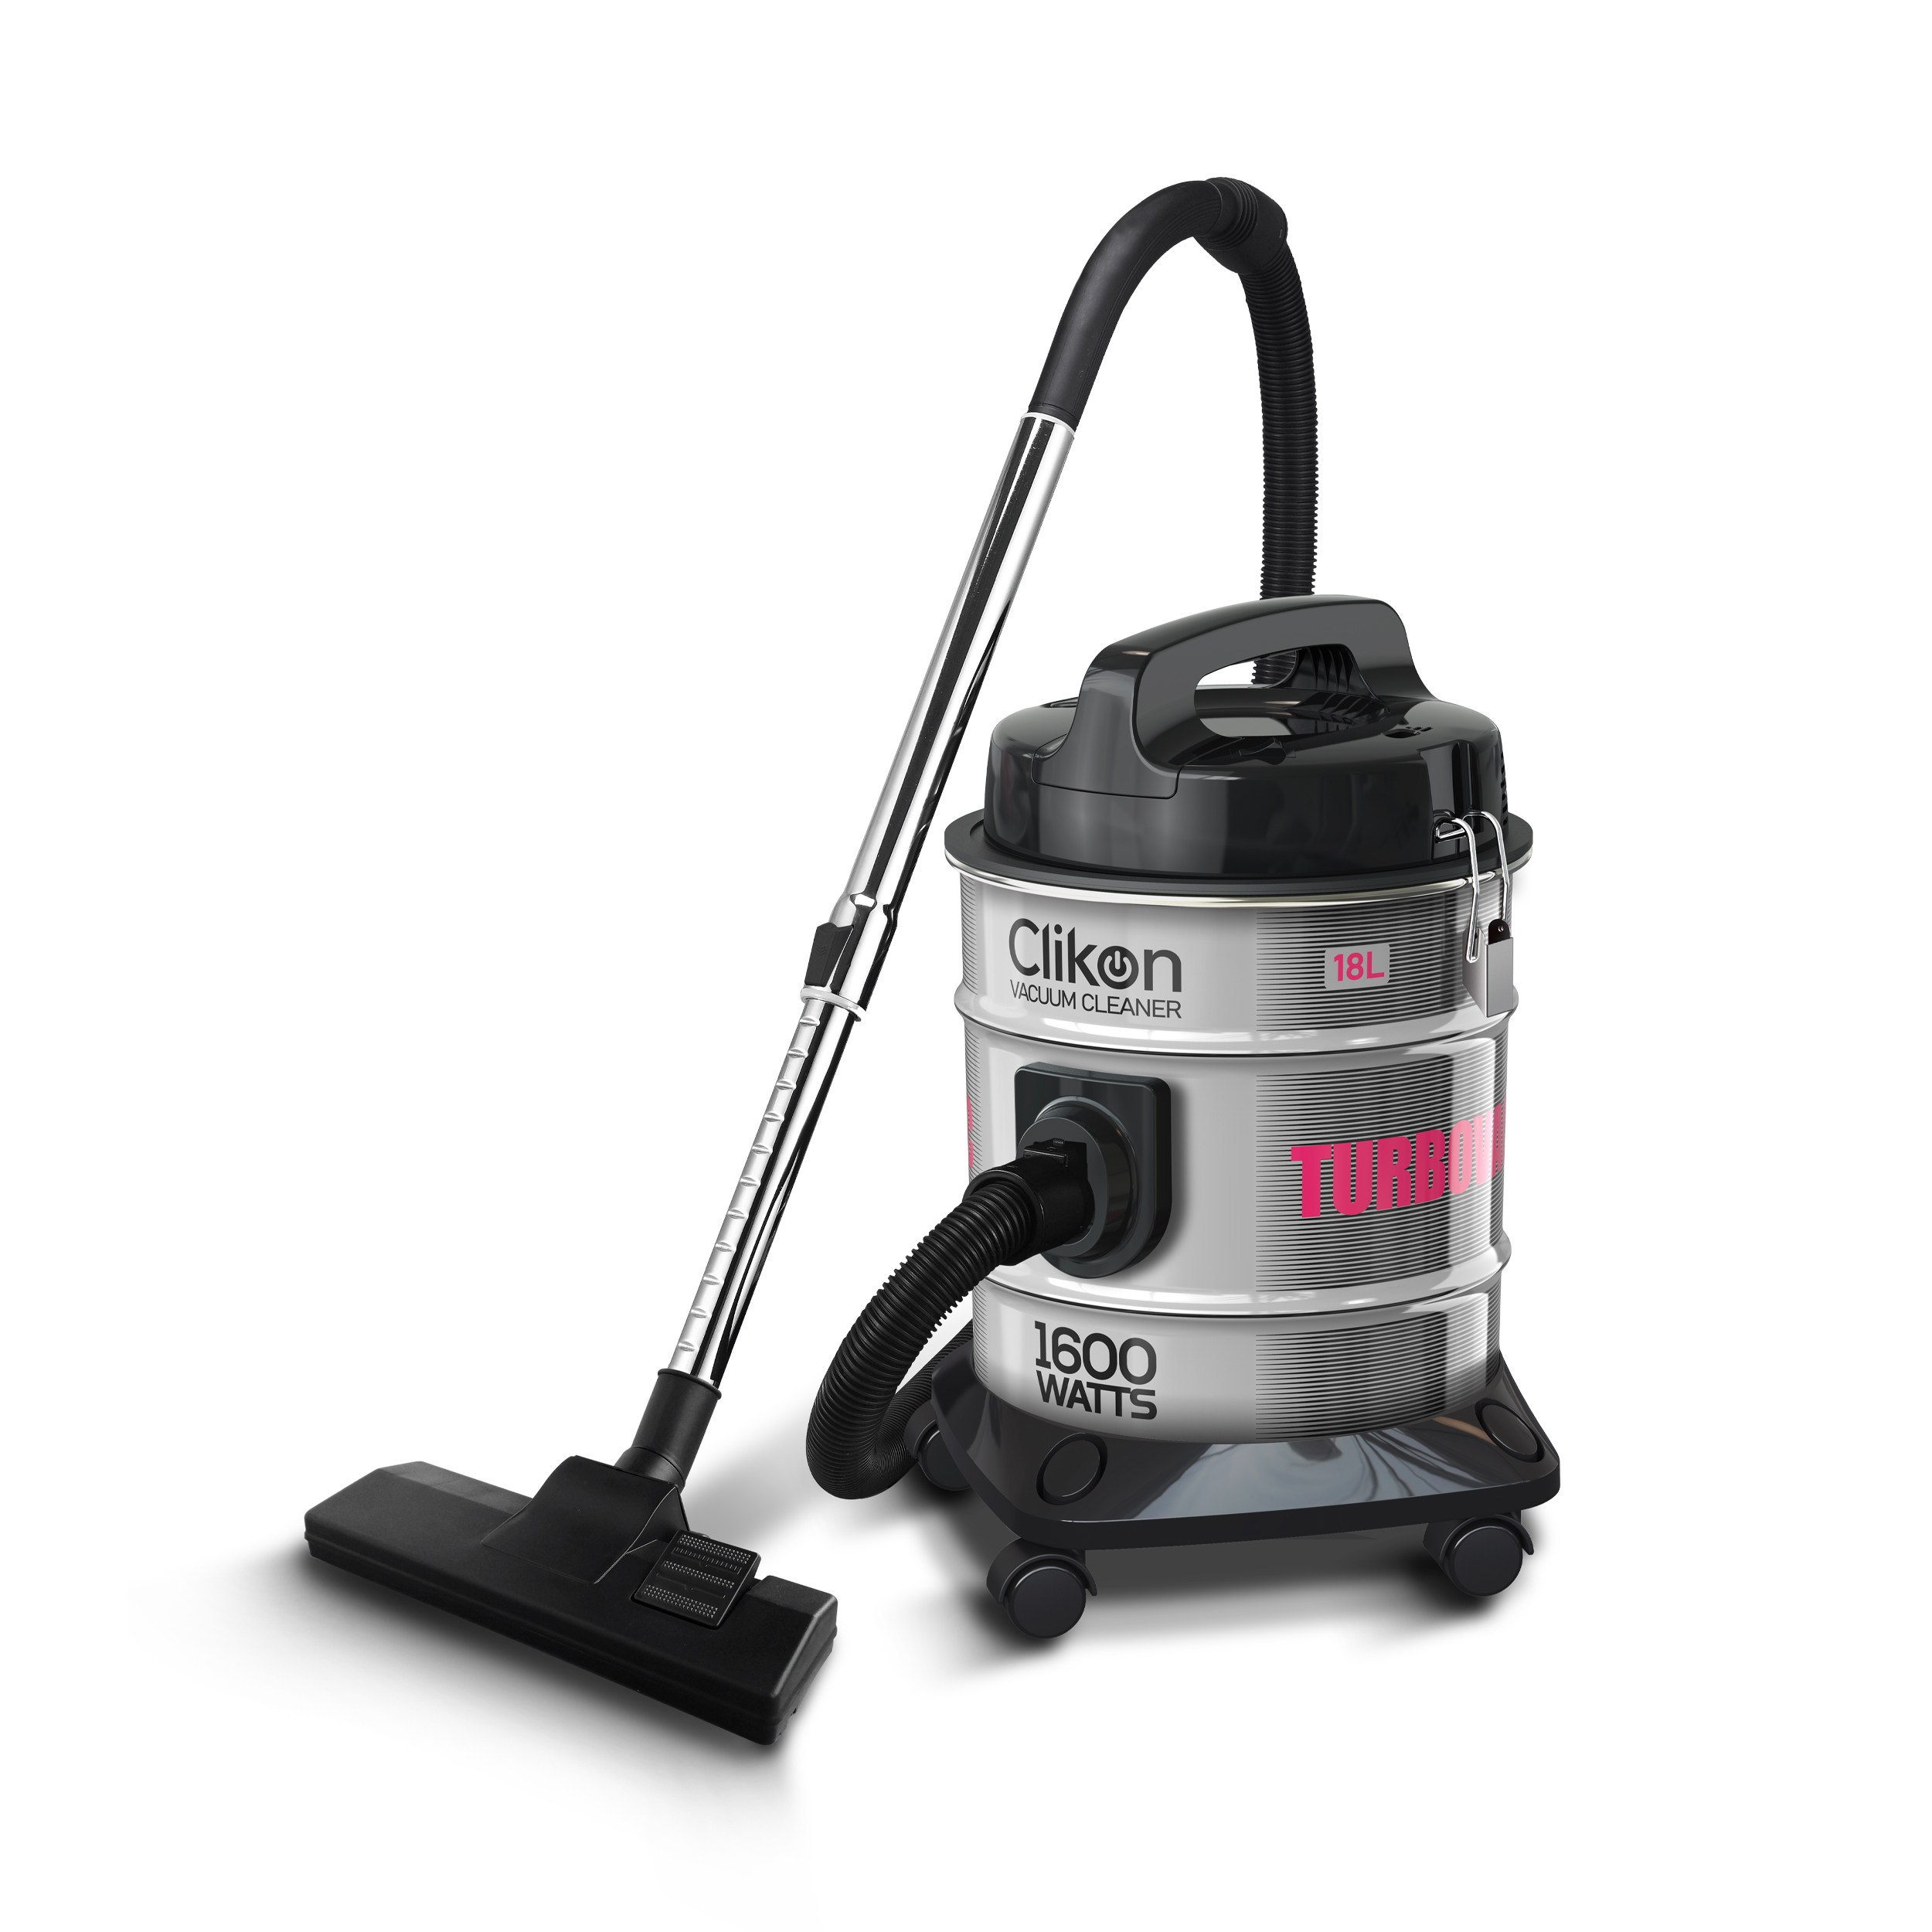 Clikon Vacuum Cleaner 18L 1600W-Ck4423